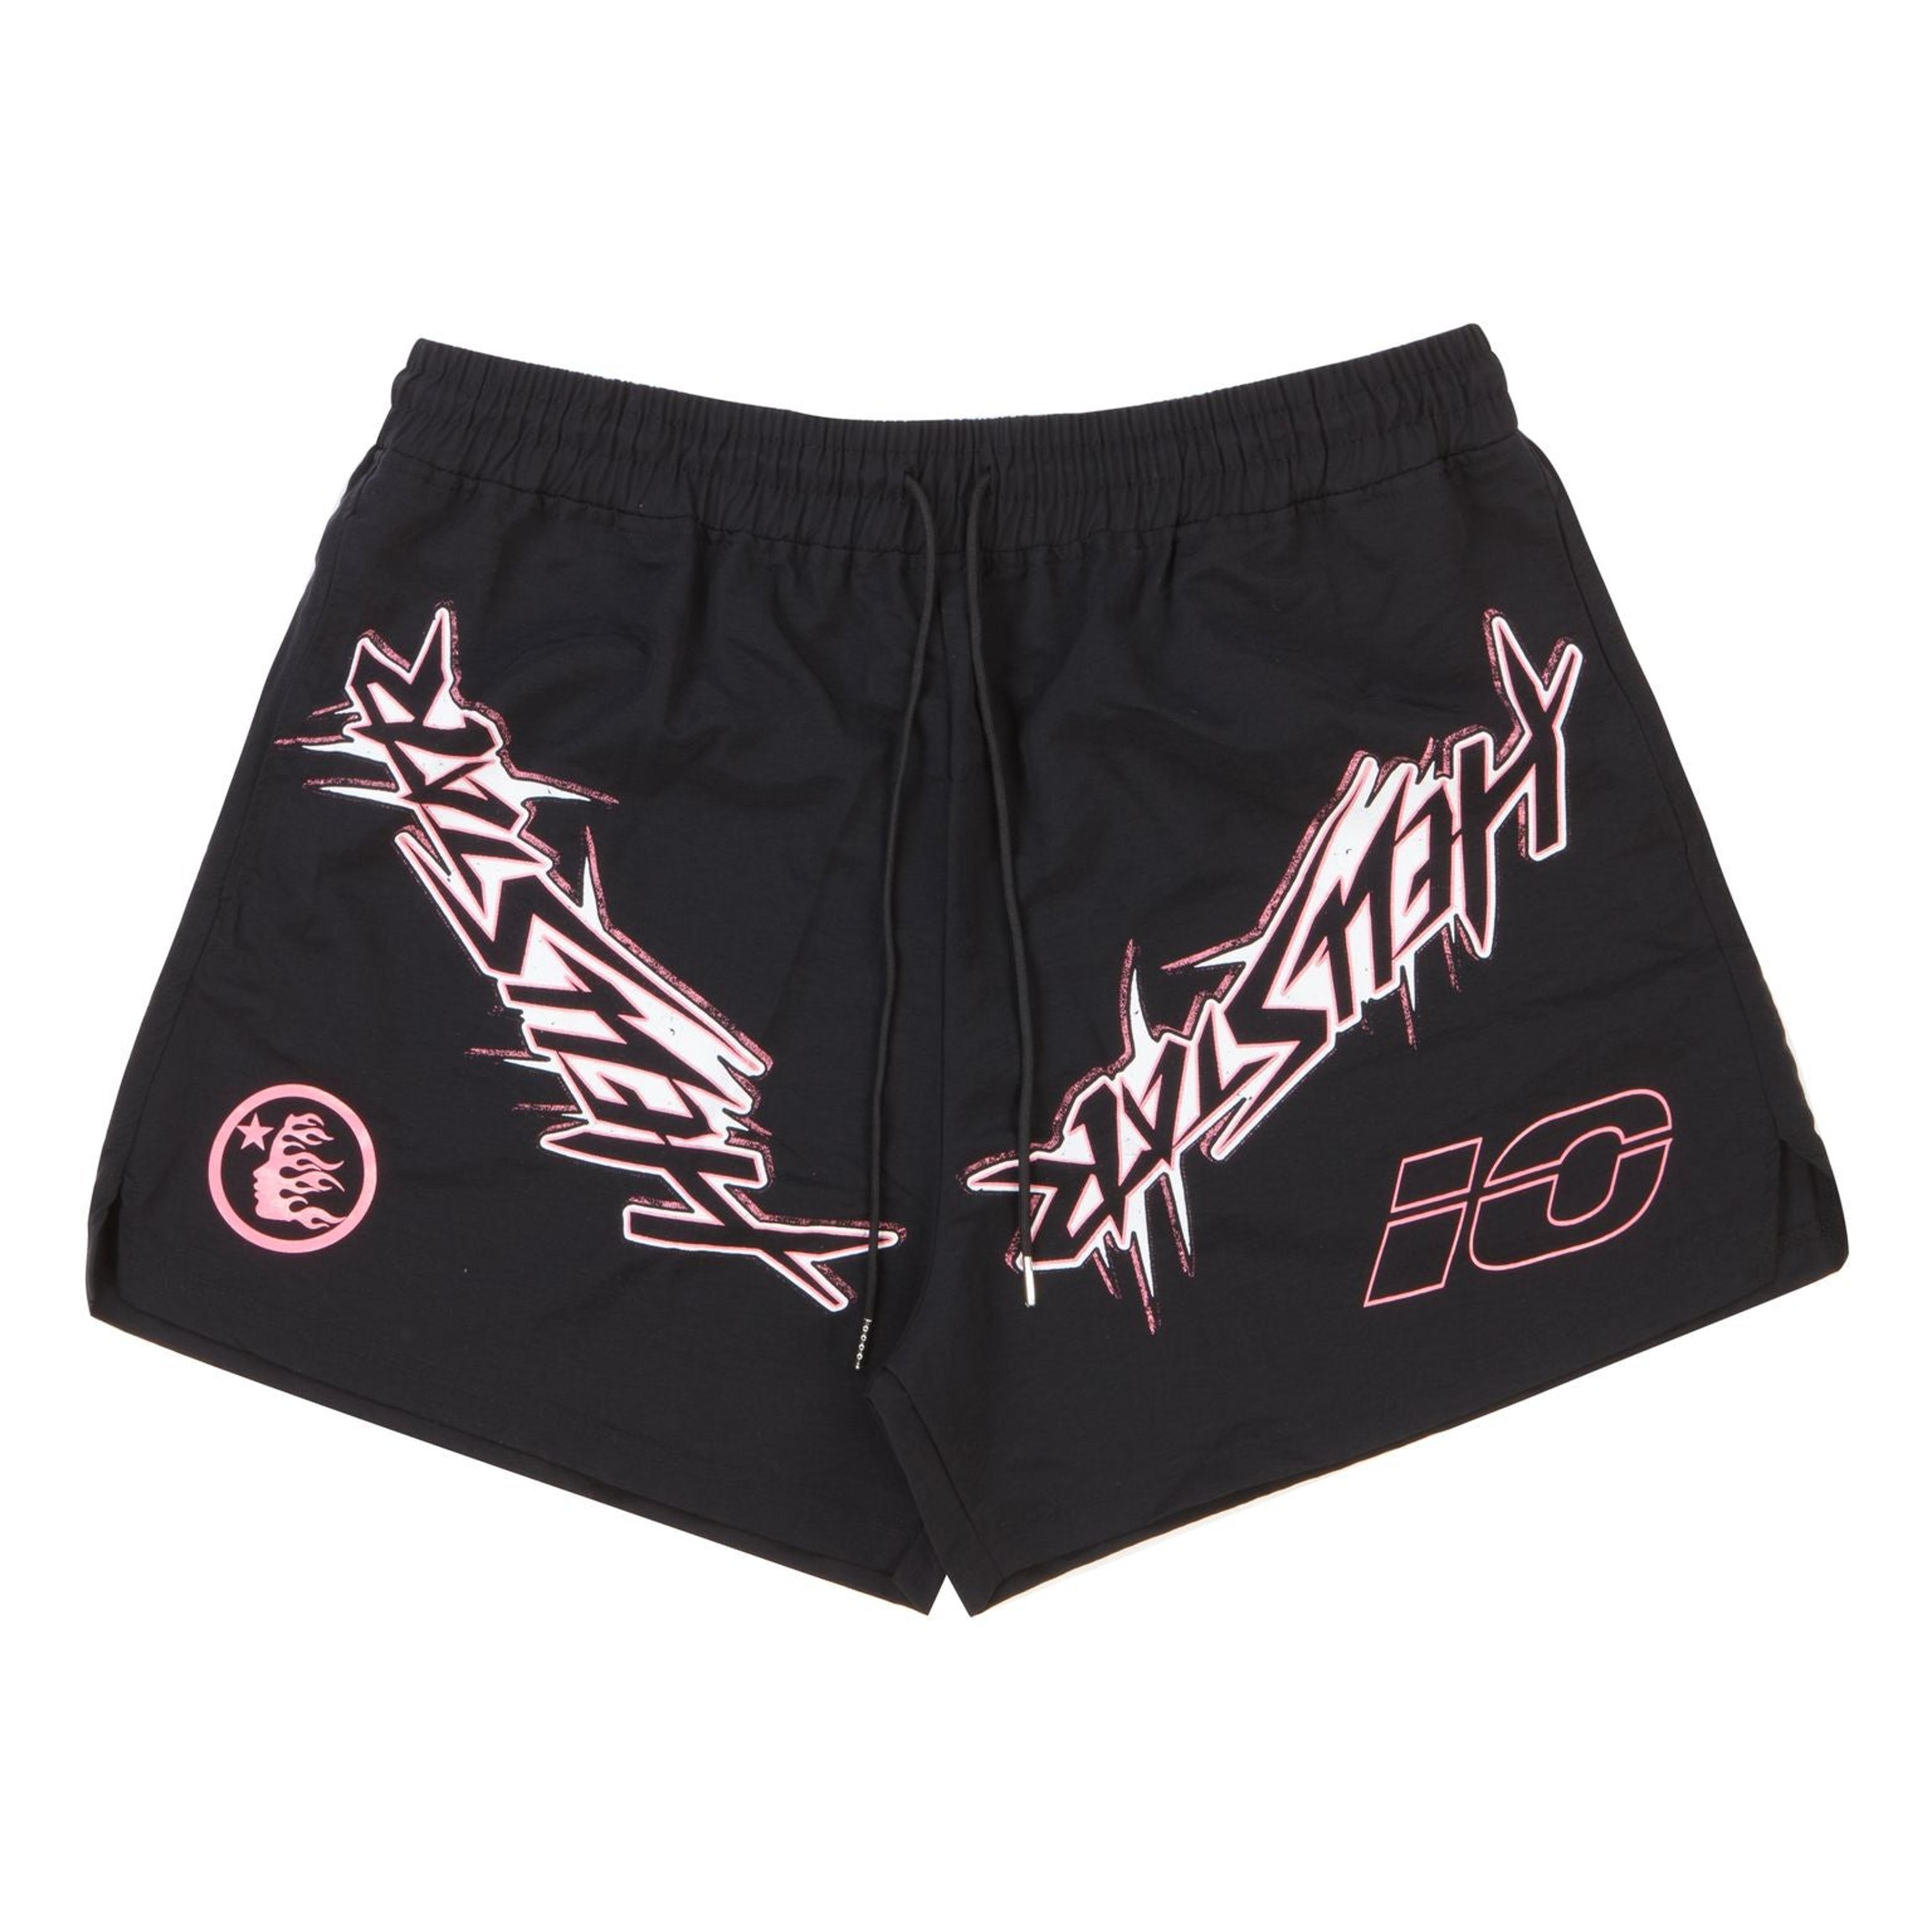 Hellstar Waxed Nylon Athletic Shorts Black Pink